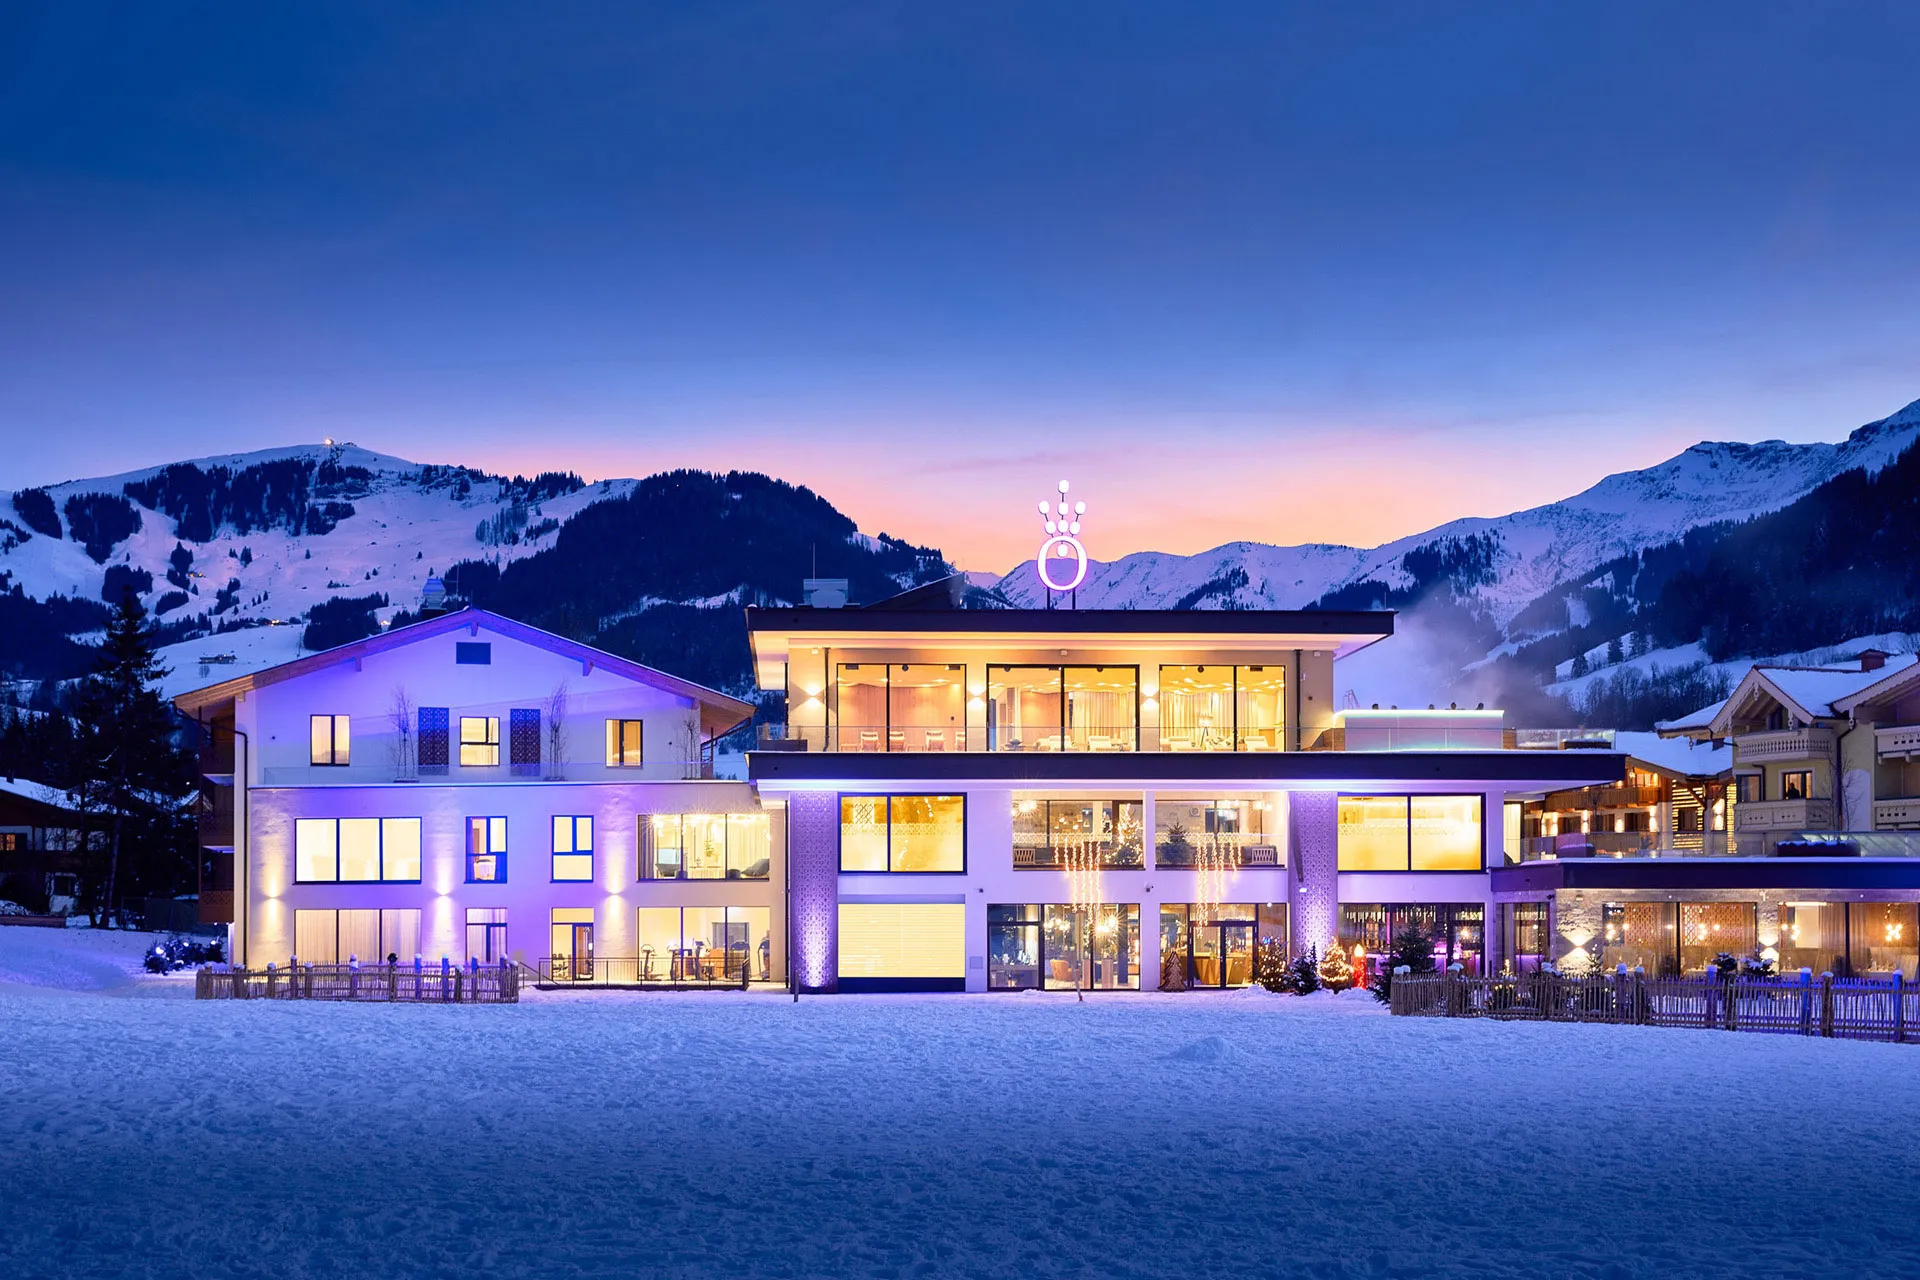 Beleuchtetes Hotel in Winterlandschaft